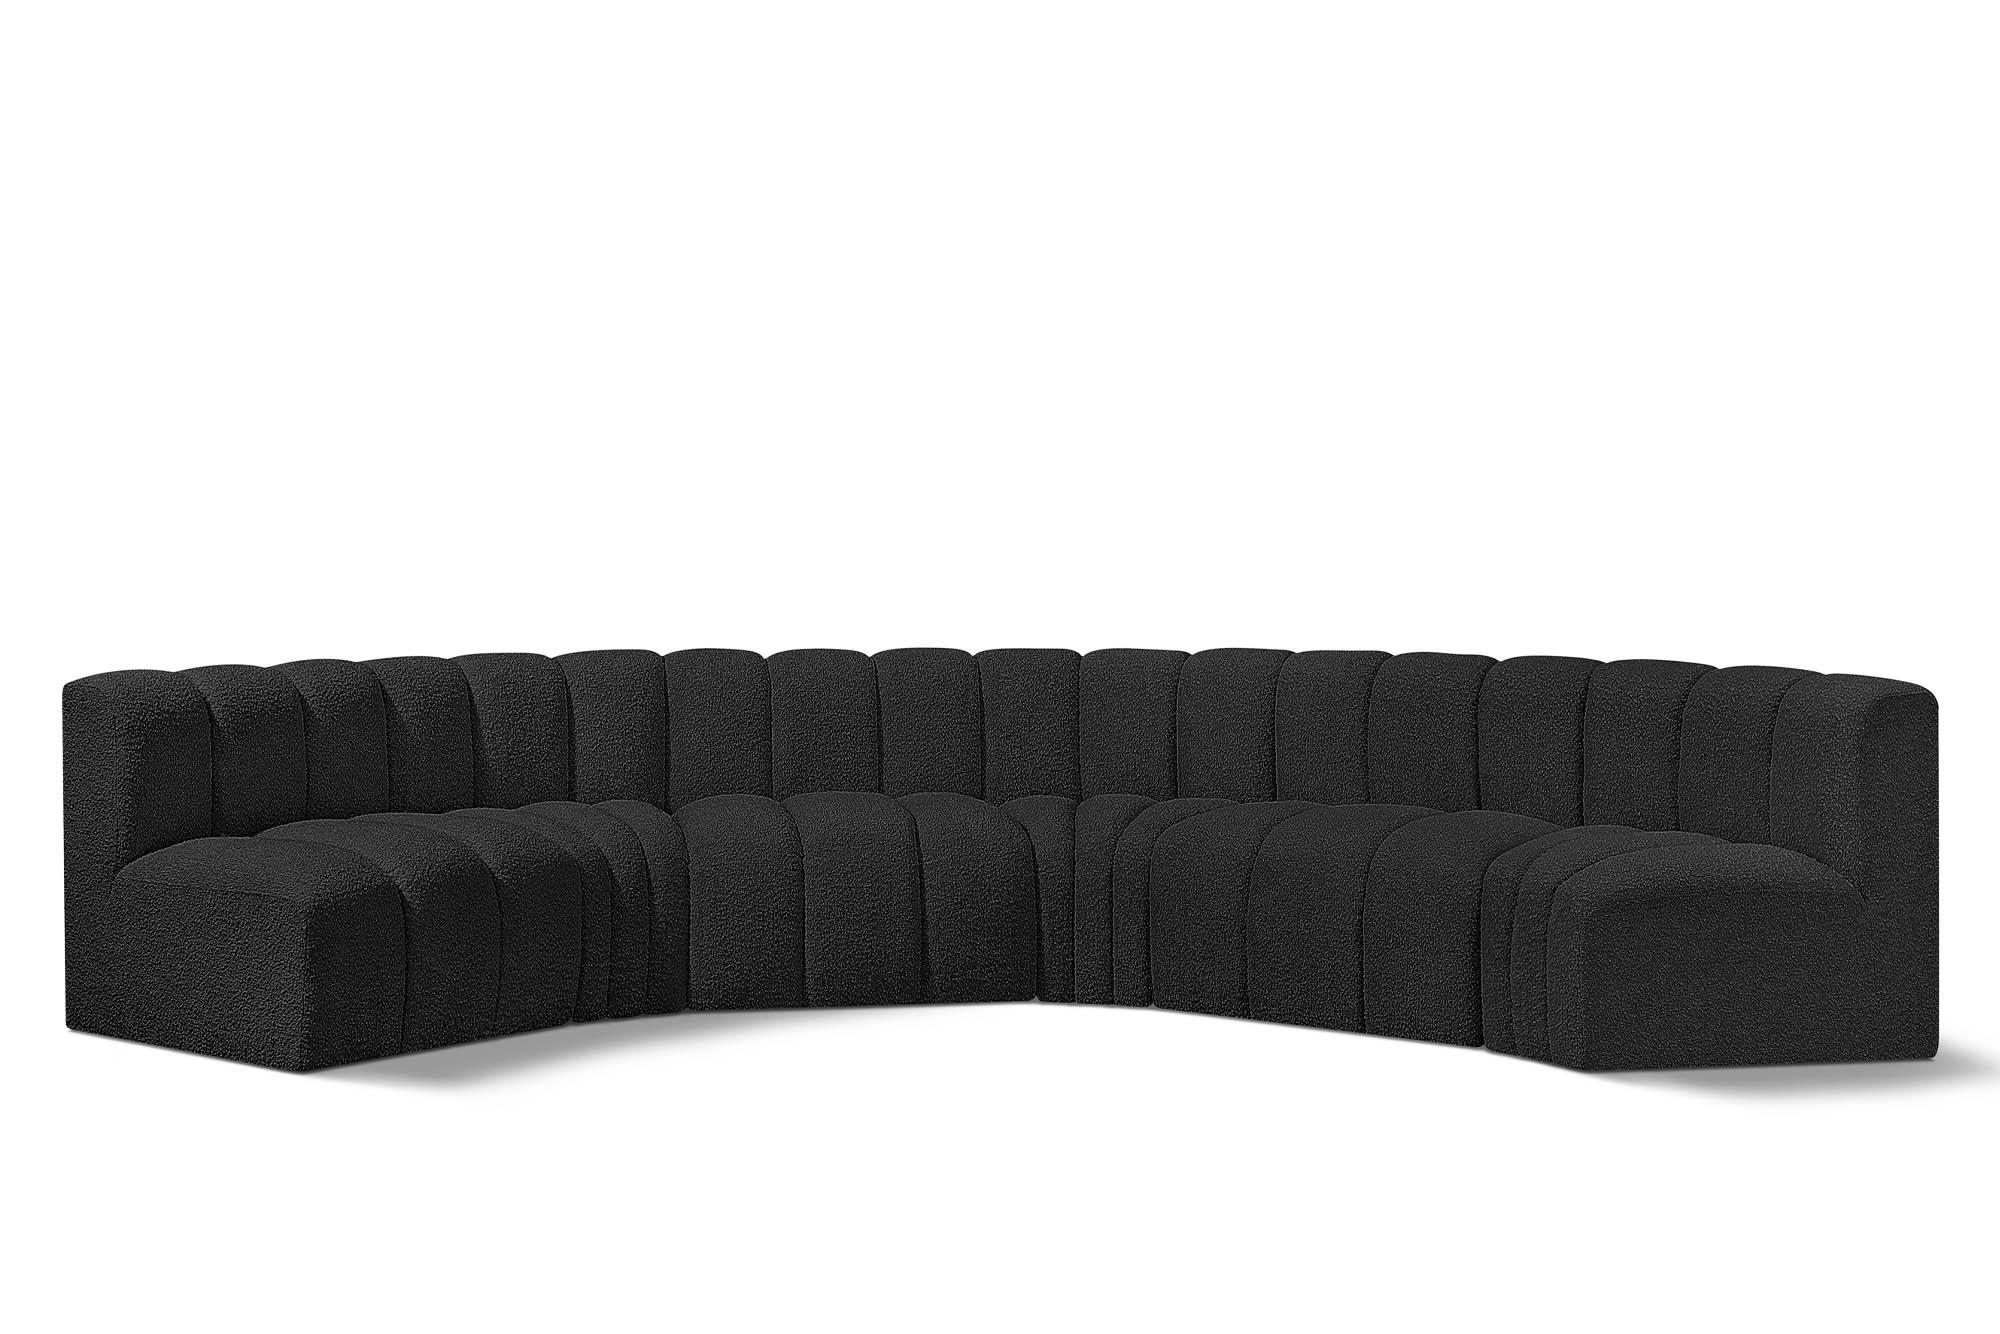 Contemporary, Modern Modular Sectional Sofa ARC 102Black-S6B 102Black-S6B in Black 